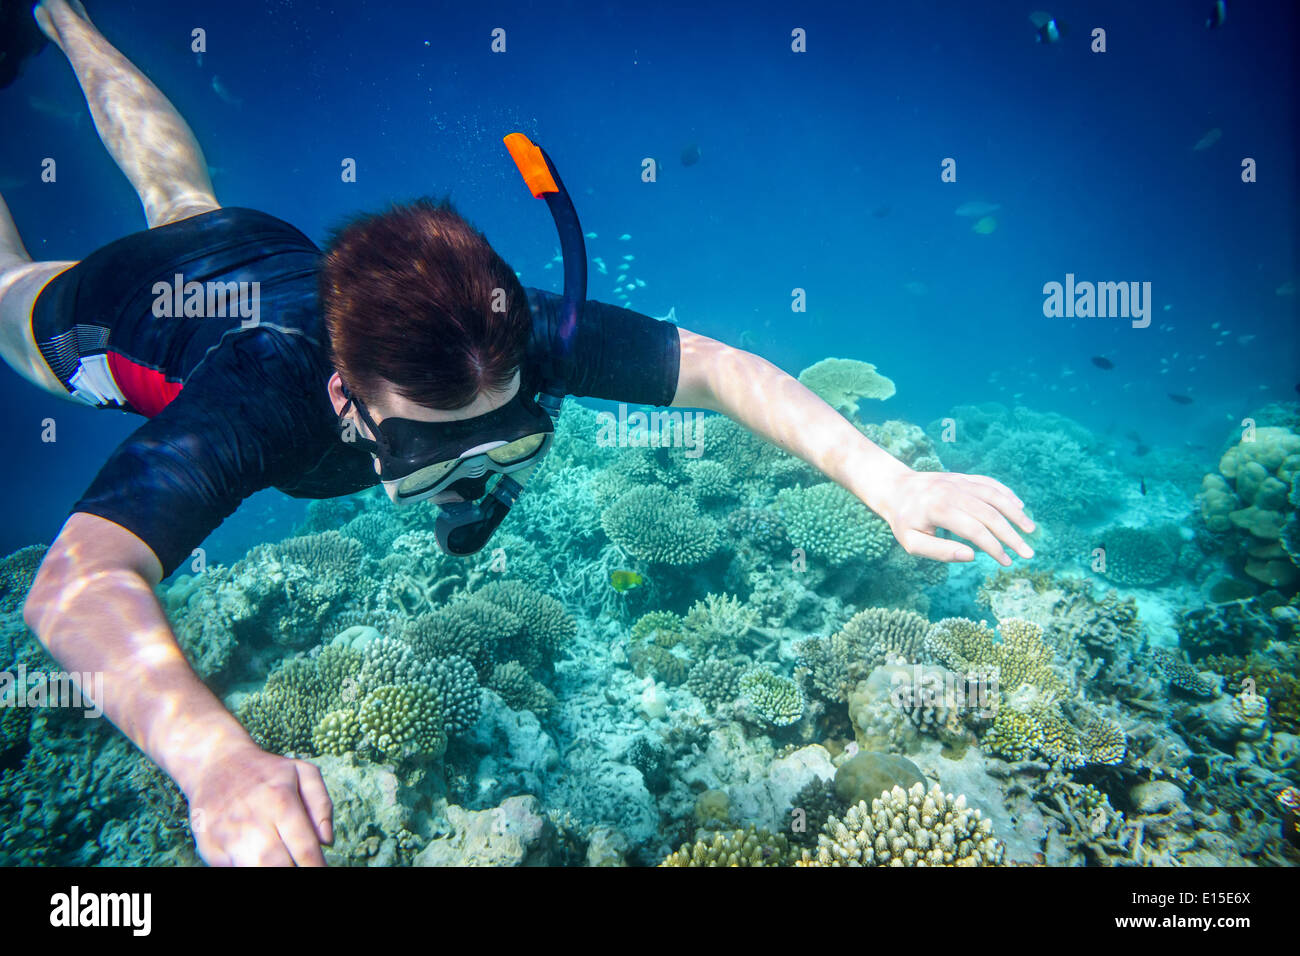 Snorkeler diving swimming under water. Stock Photo